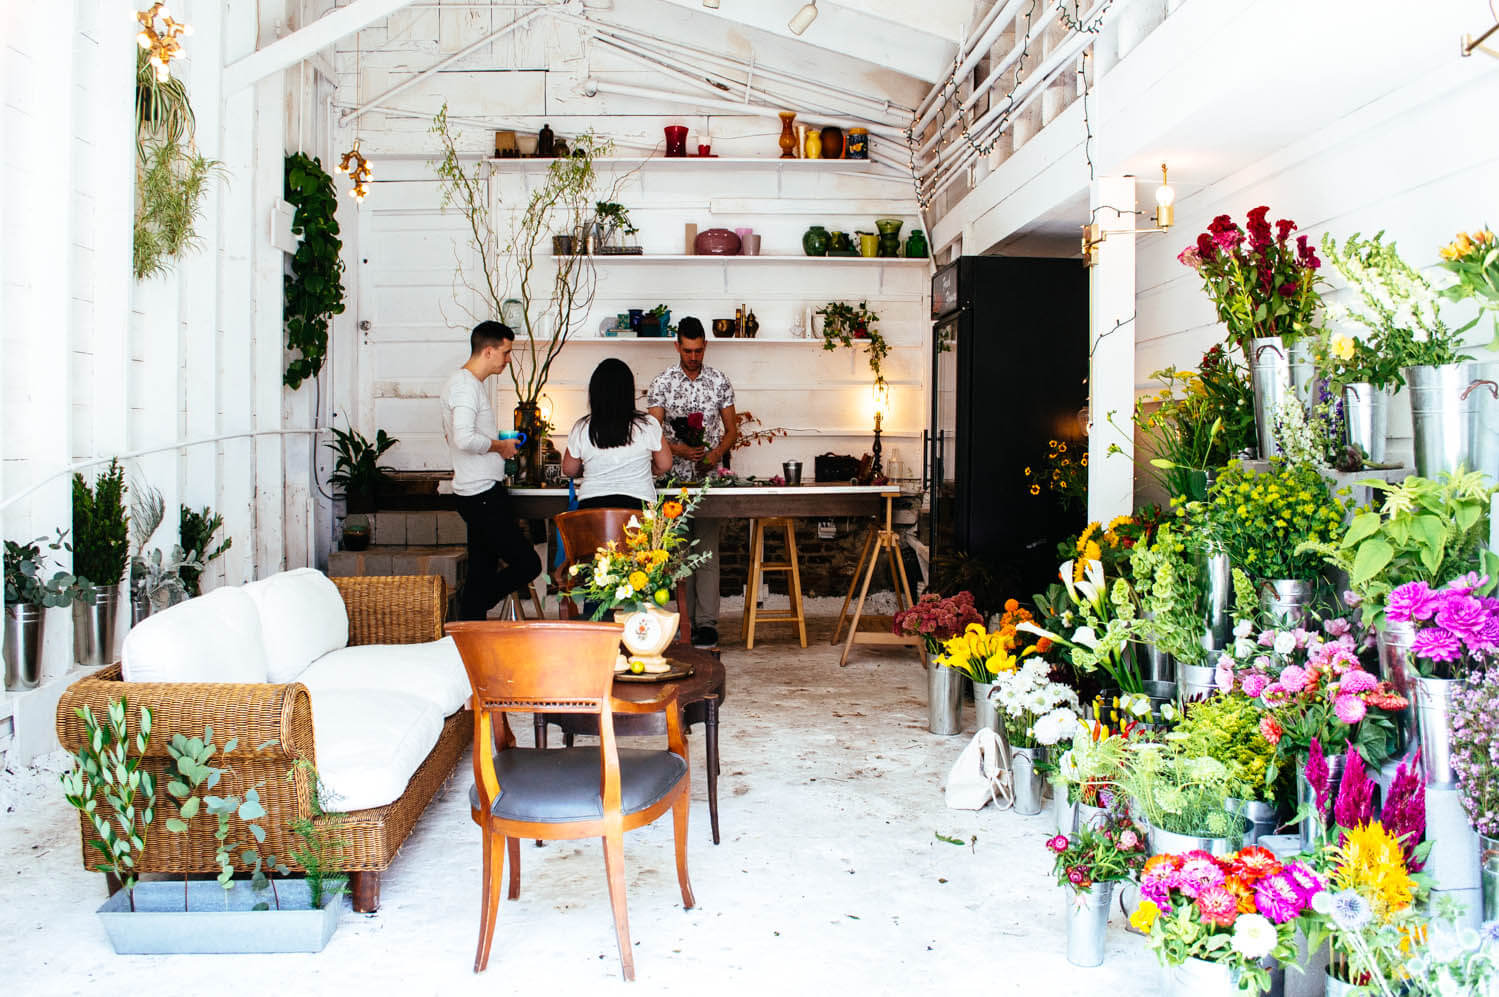 My flower shop